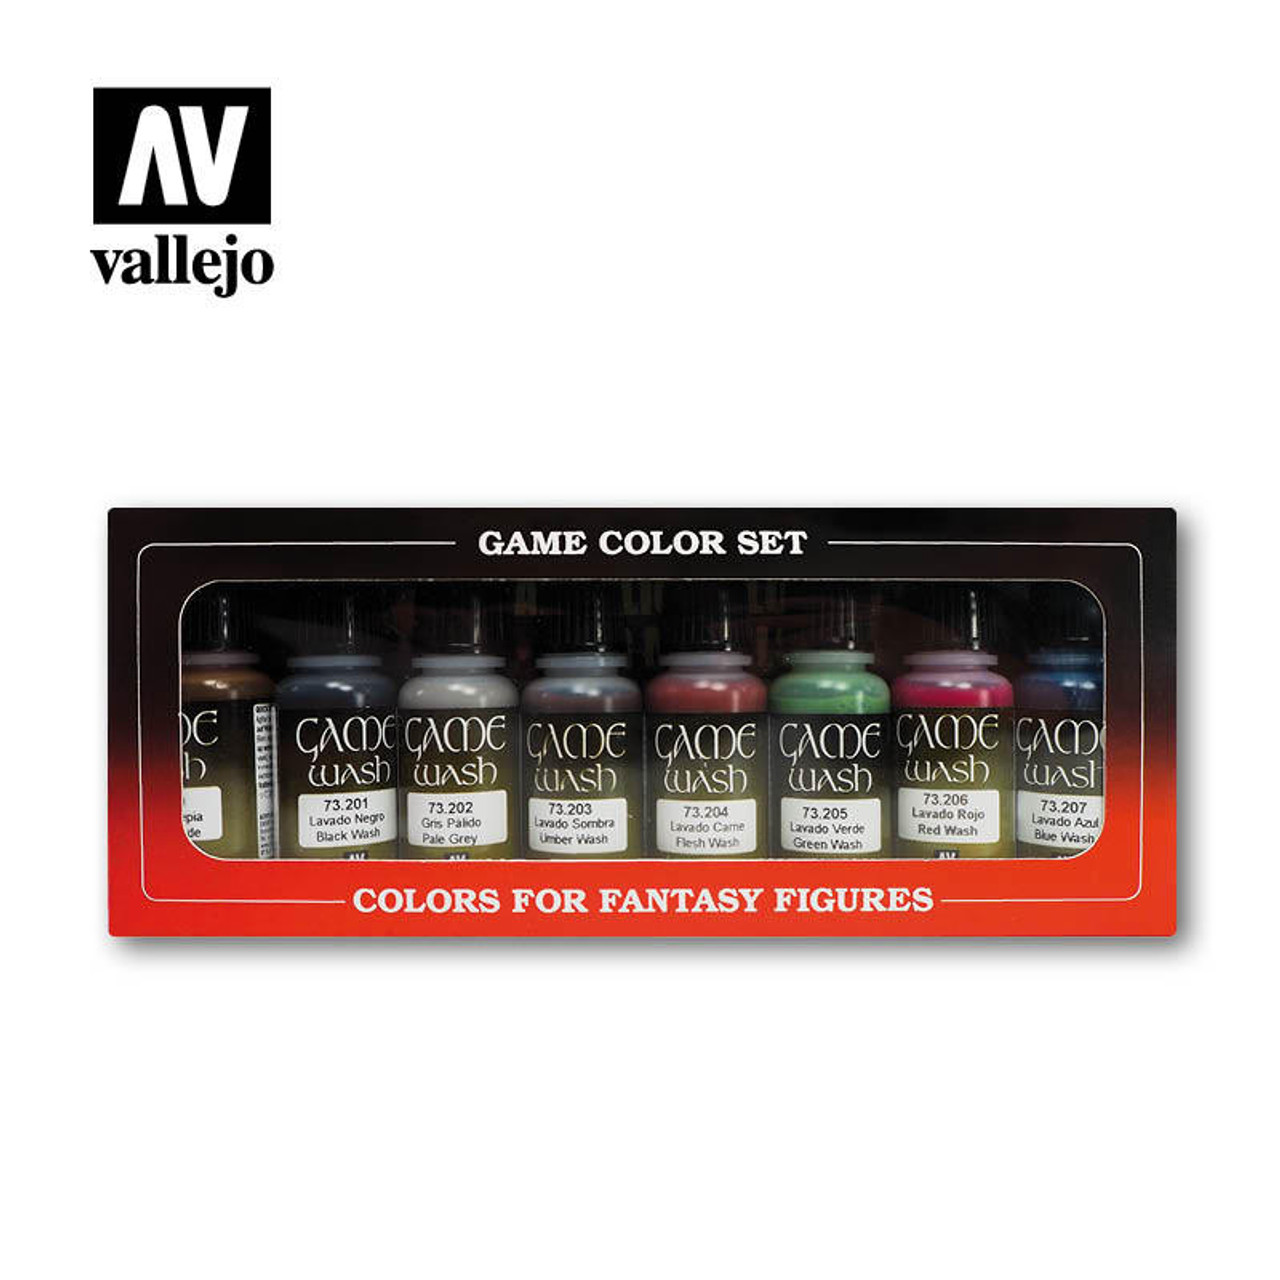 Vallejo Model Color Paint Charts  Paint charts, Vallejo paint, Vallejo